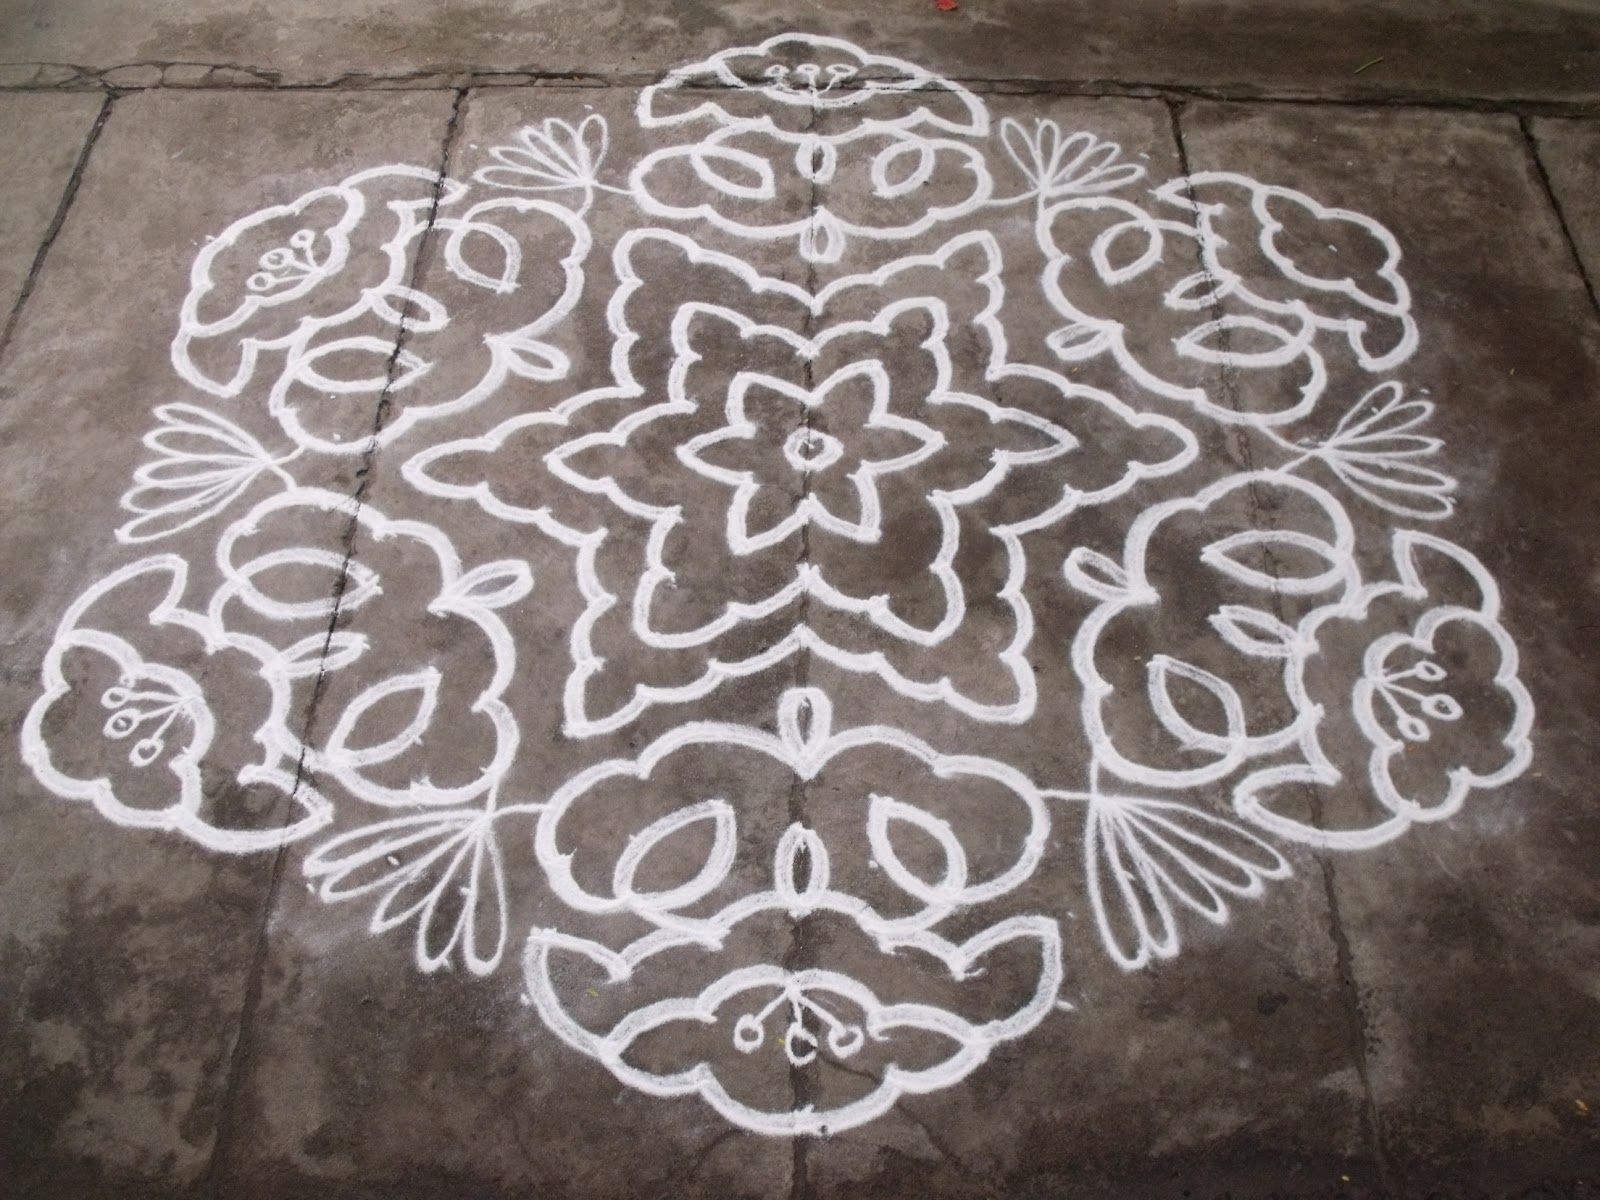 Rangoli designs/Kolam: 21-11 pulli kolam- interlaced dots kolam